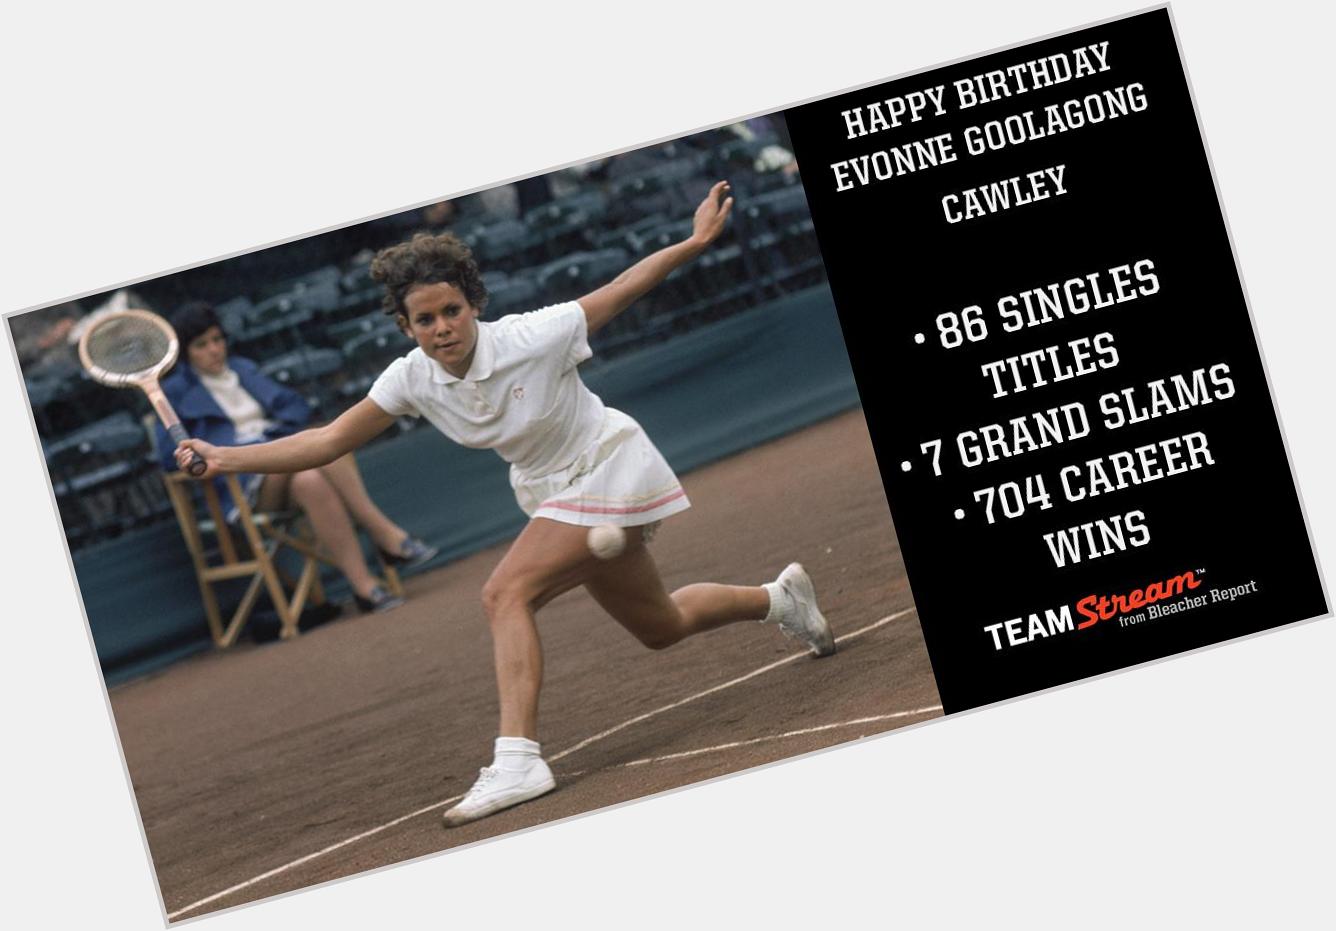 Happy 64th birthday to Aussie tennis legend Evonne Goolagong Cawley! 